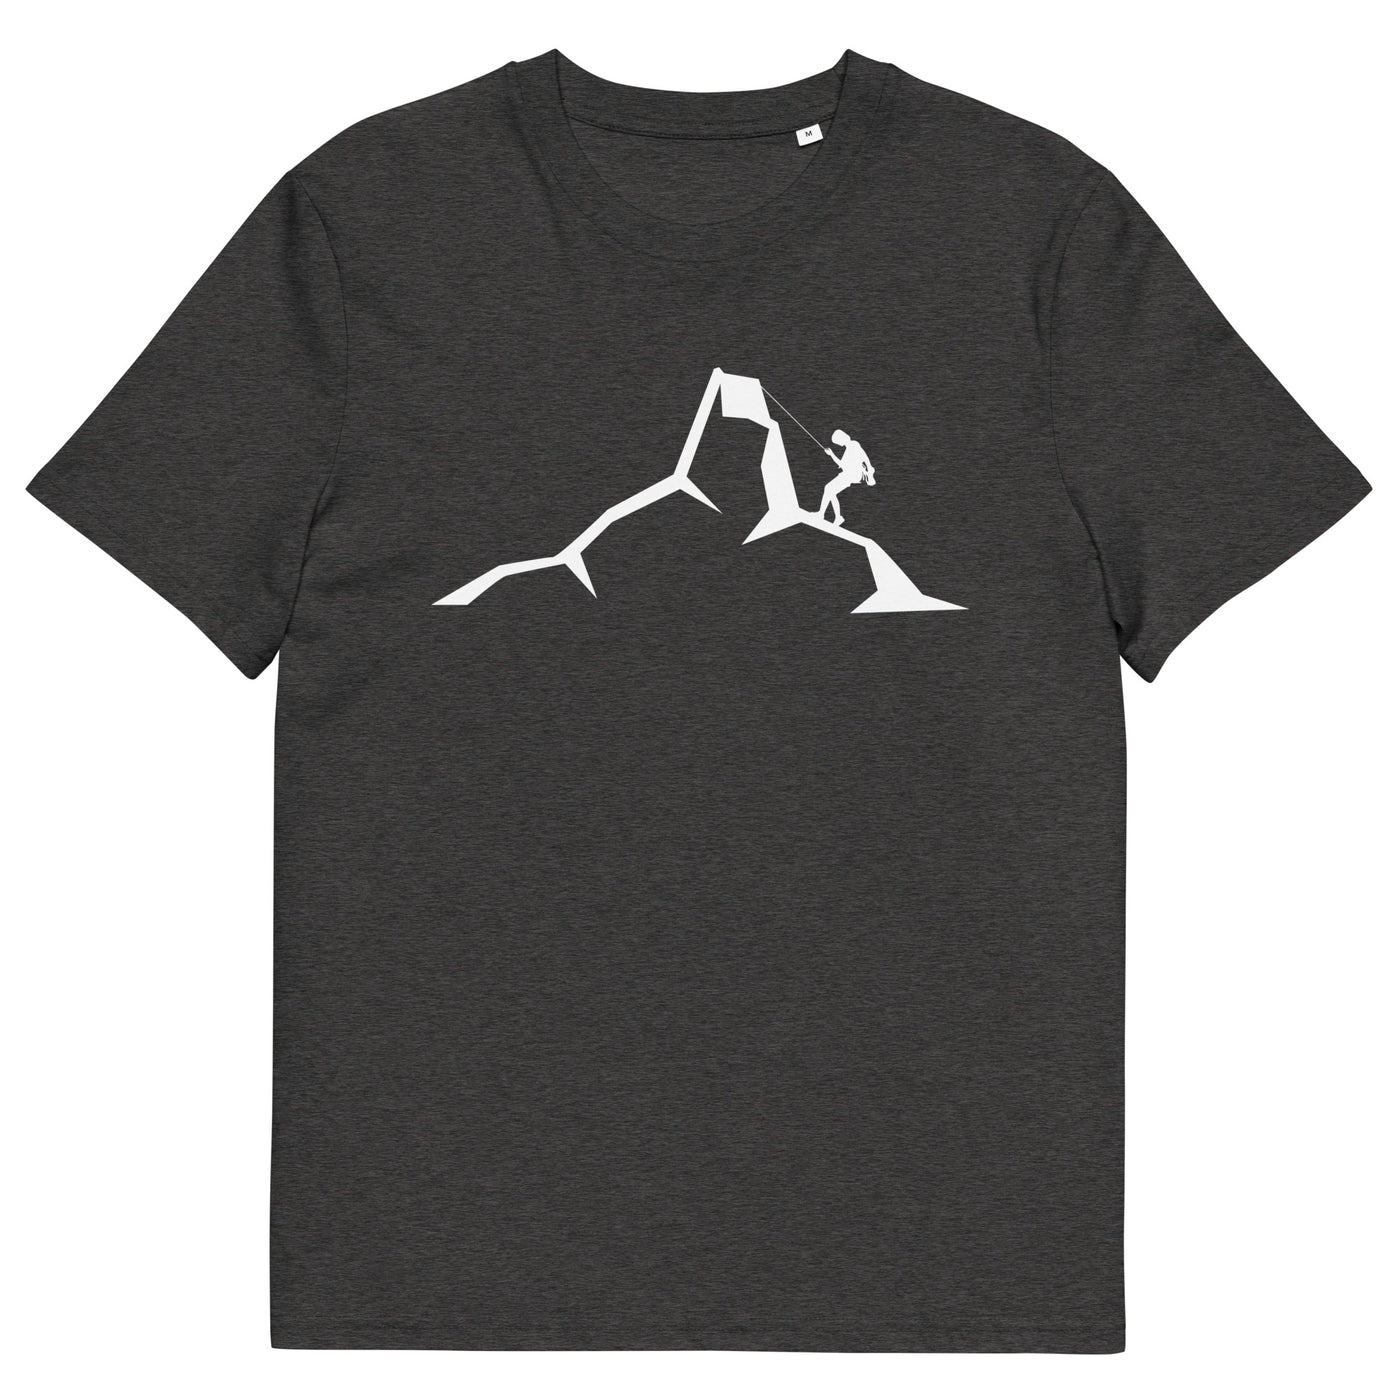 Berge - Klettern - Herren Premium Organic T-Shirt klettern xxx yyy zzz Dark Heather Grey